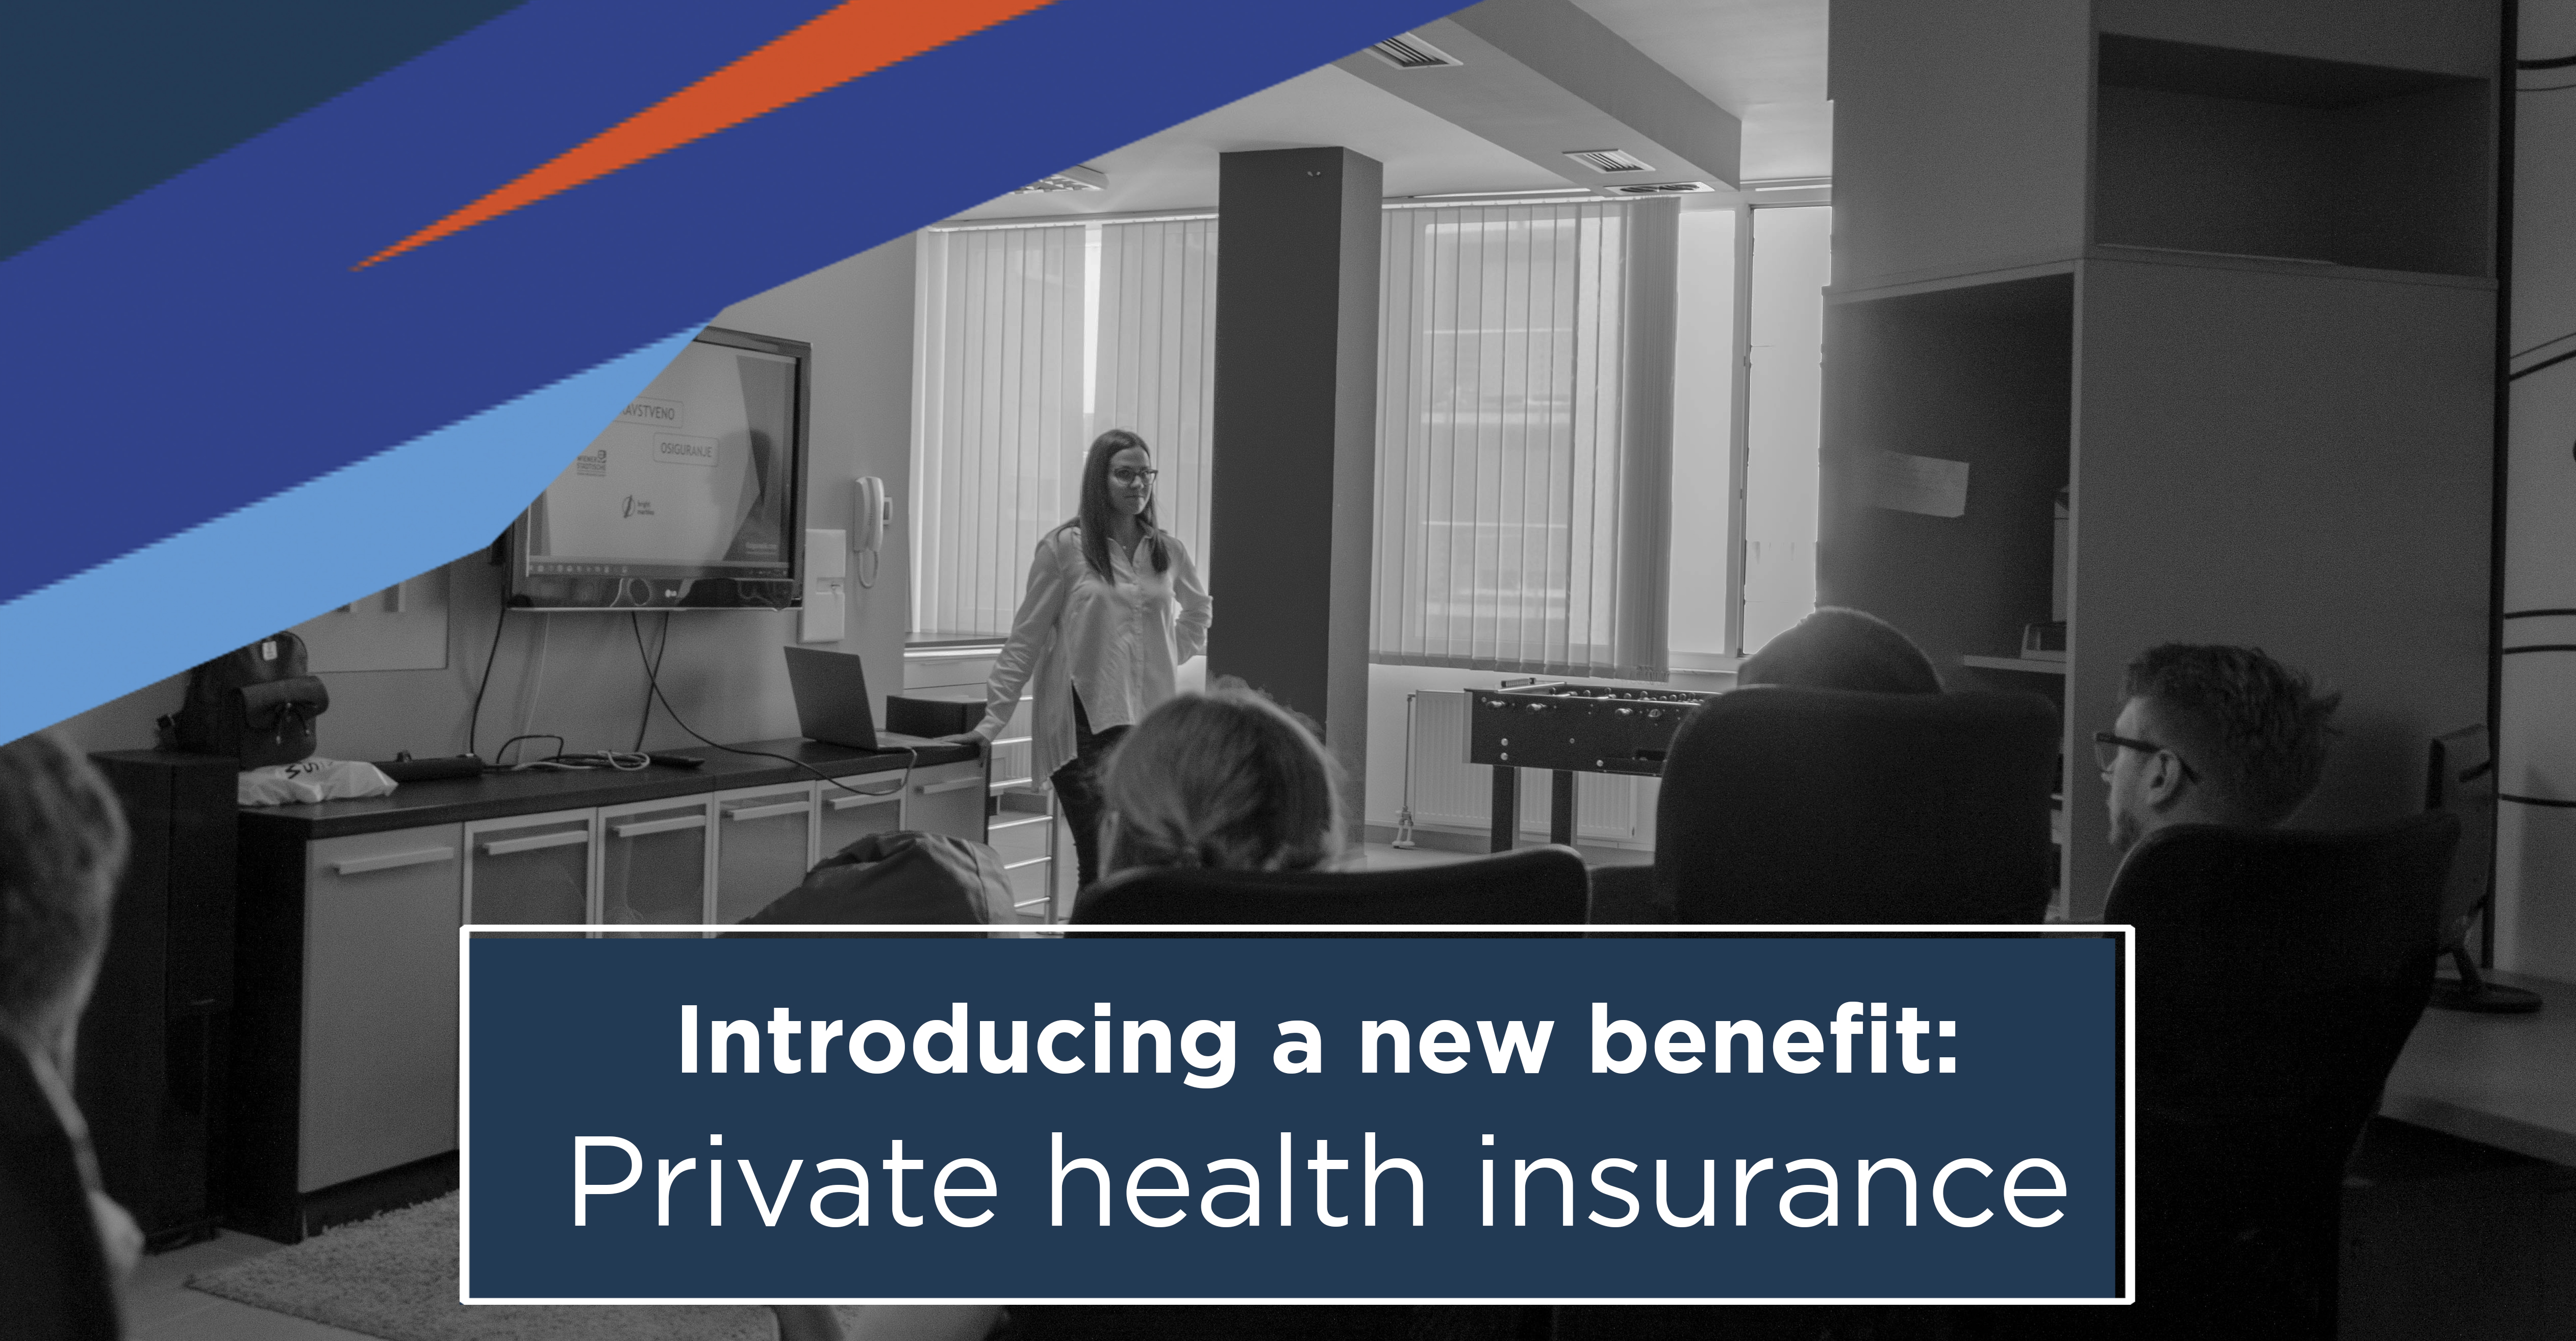 Private health insurance benefit